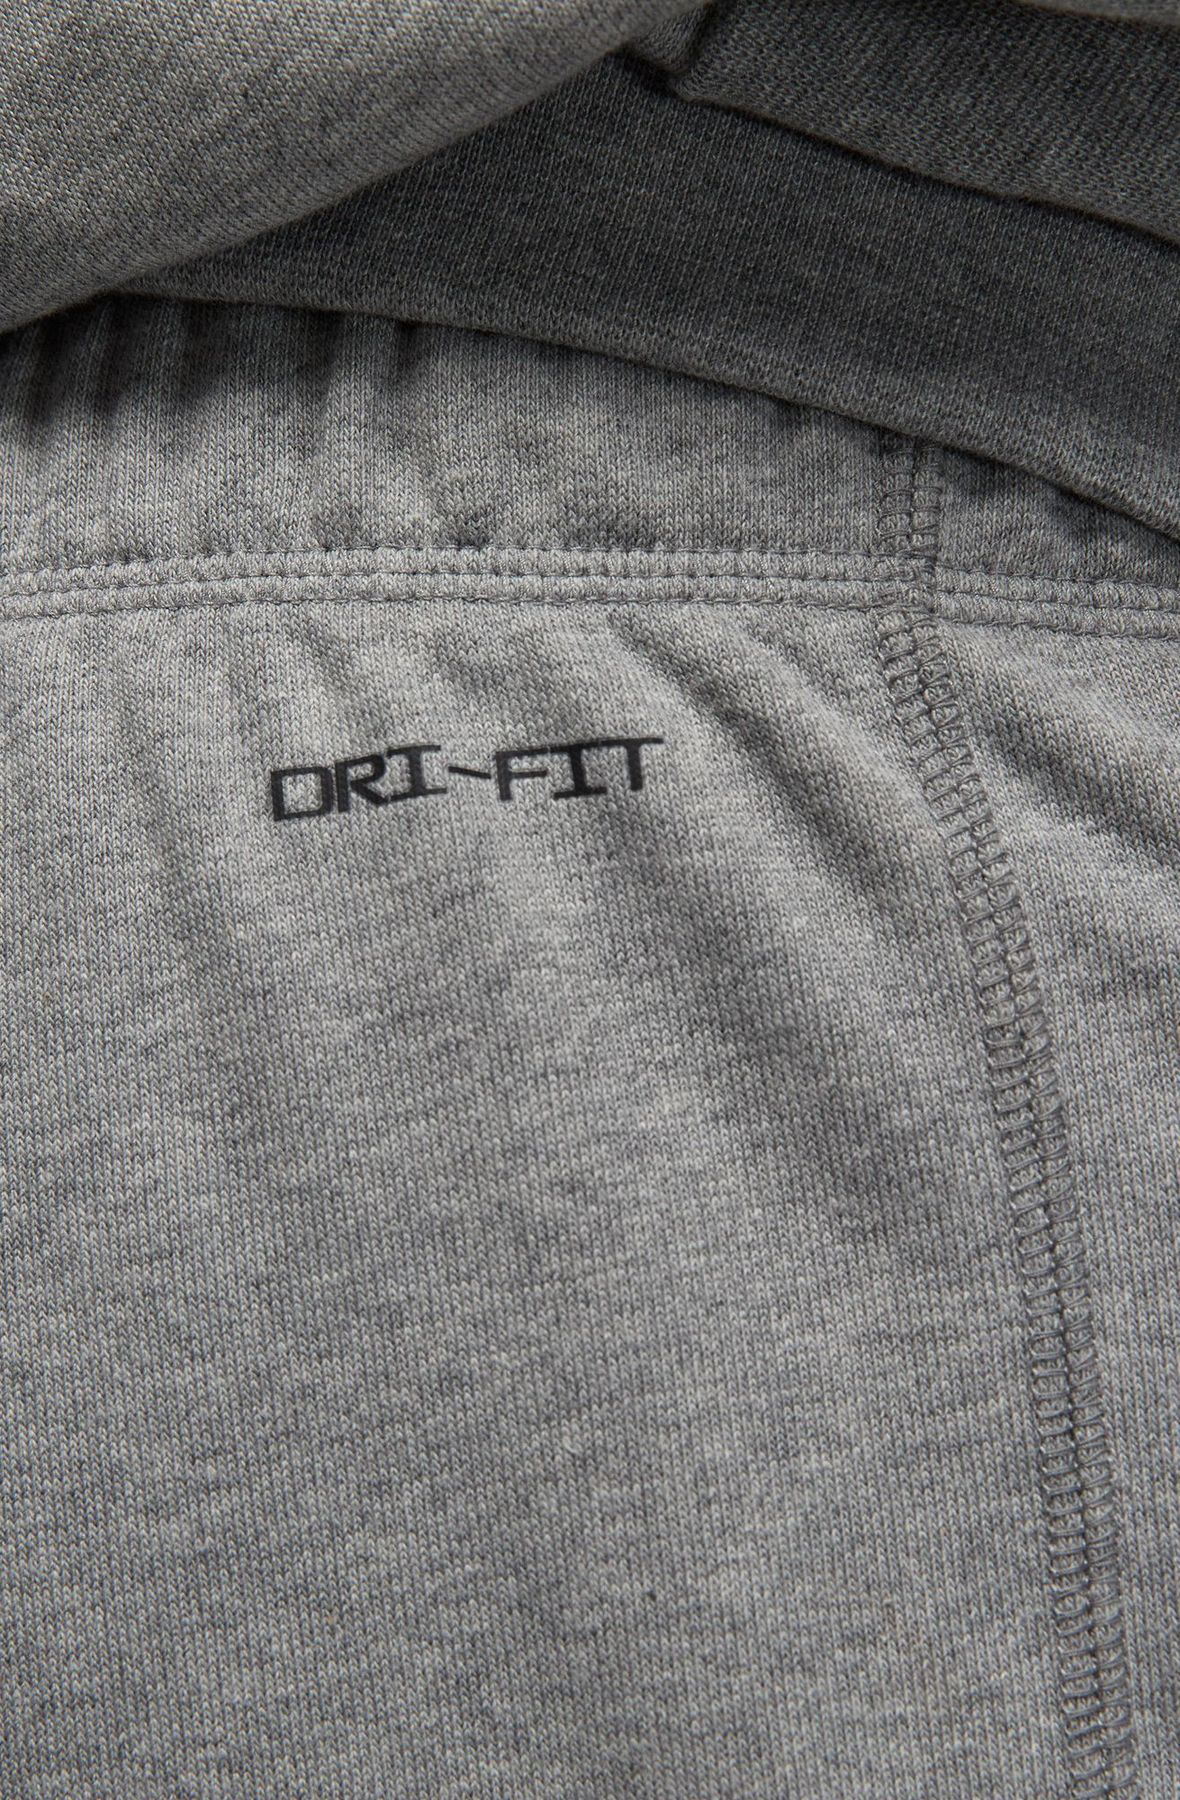 JORDAN Dri-FIT Sport Crossover Fleece Pants DQ7332 091 - Shiekh